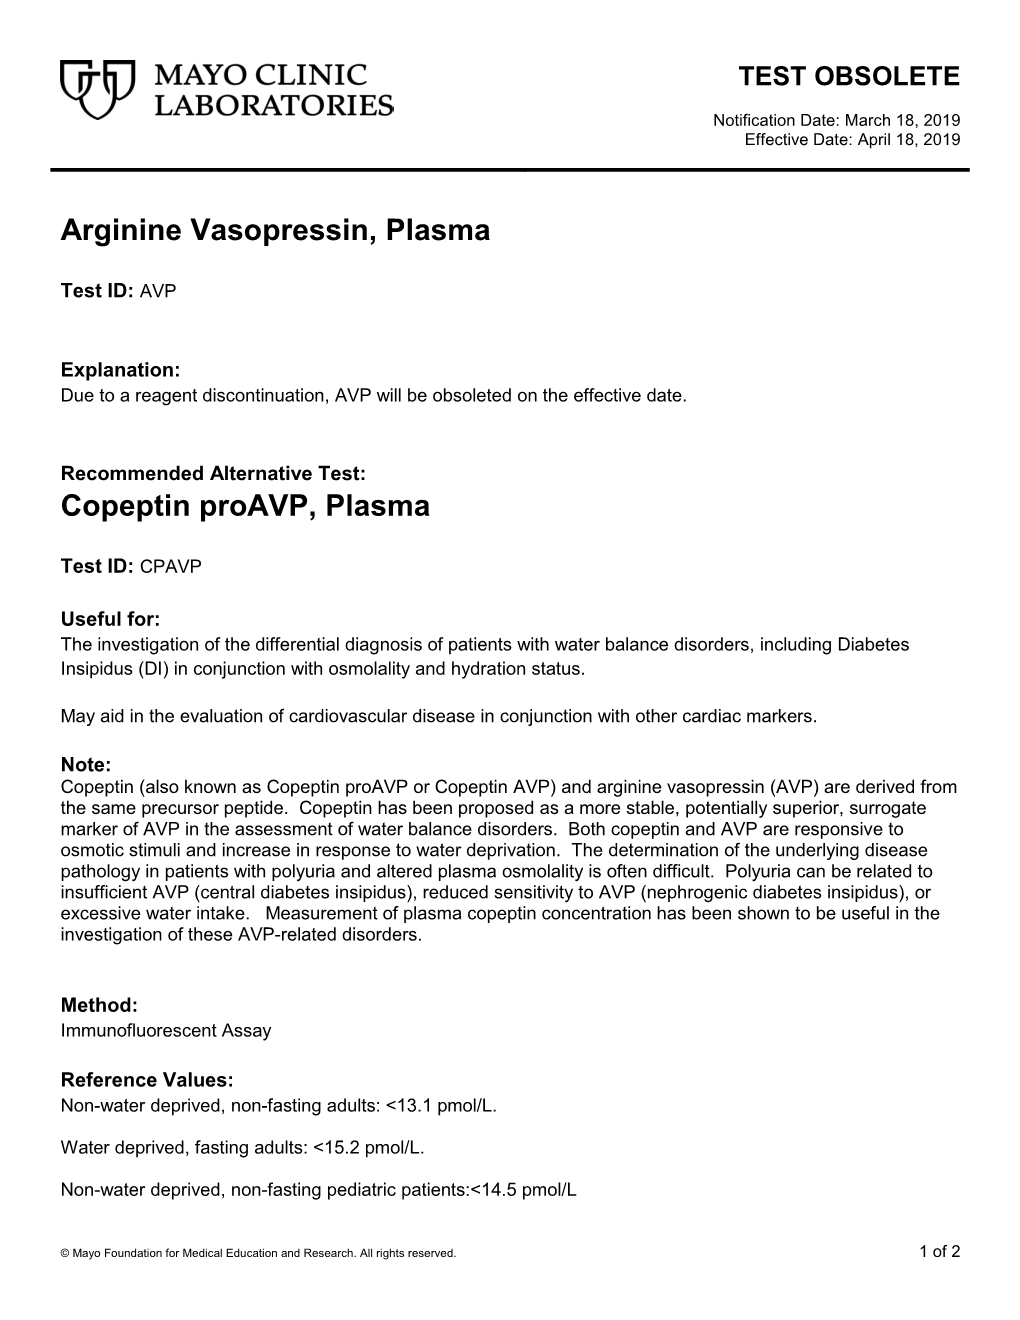 Arginine Vasopressin, Plasma Copeptin Proavp, Plasma